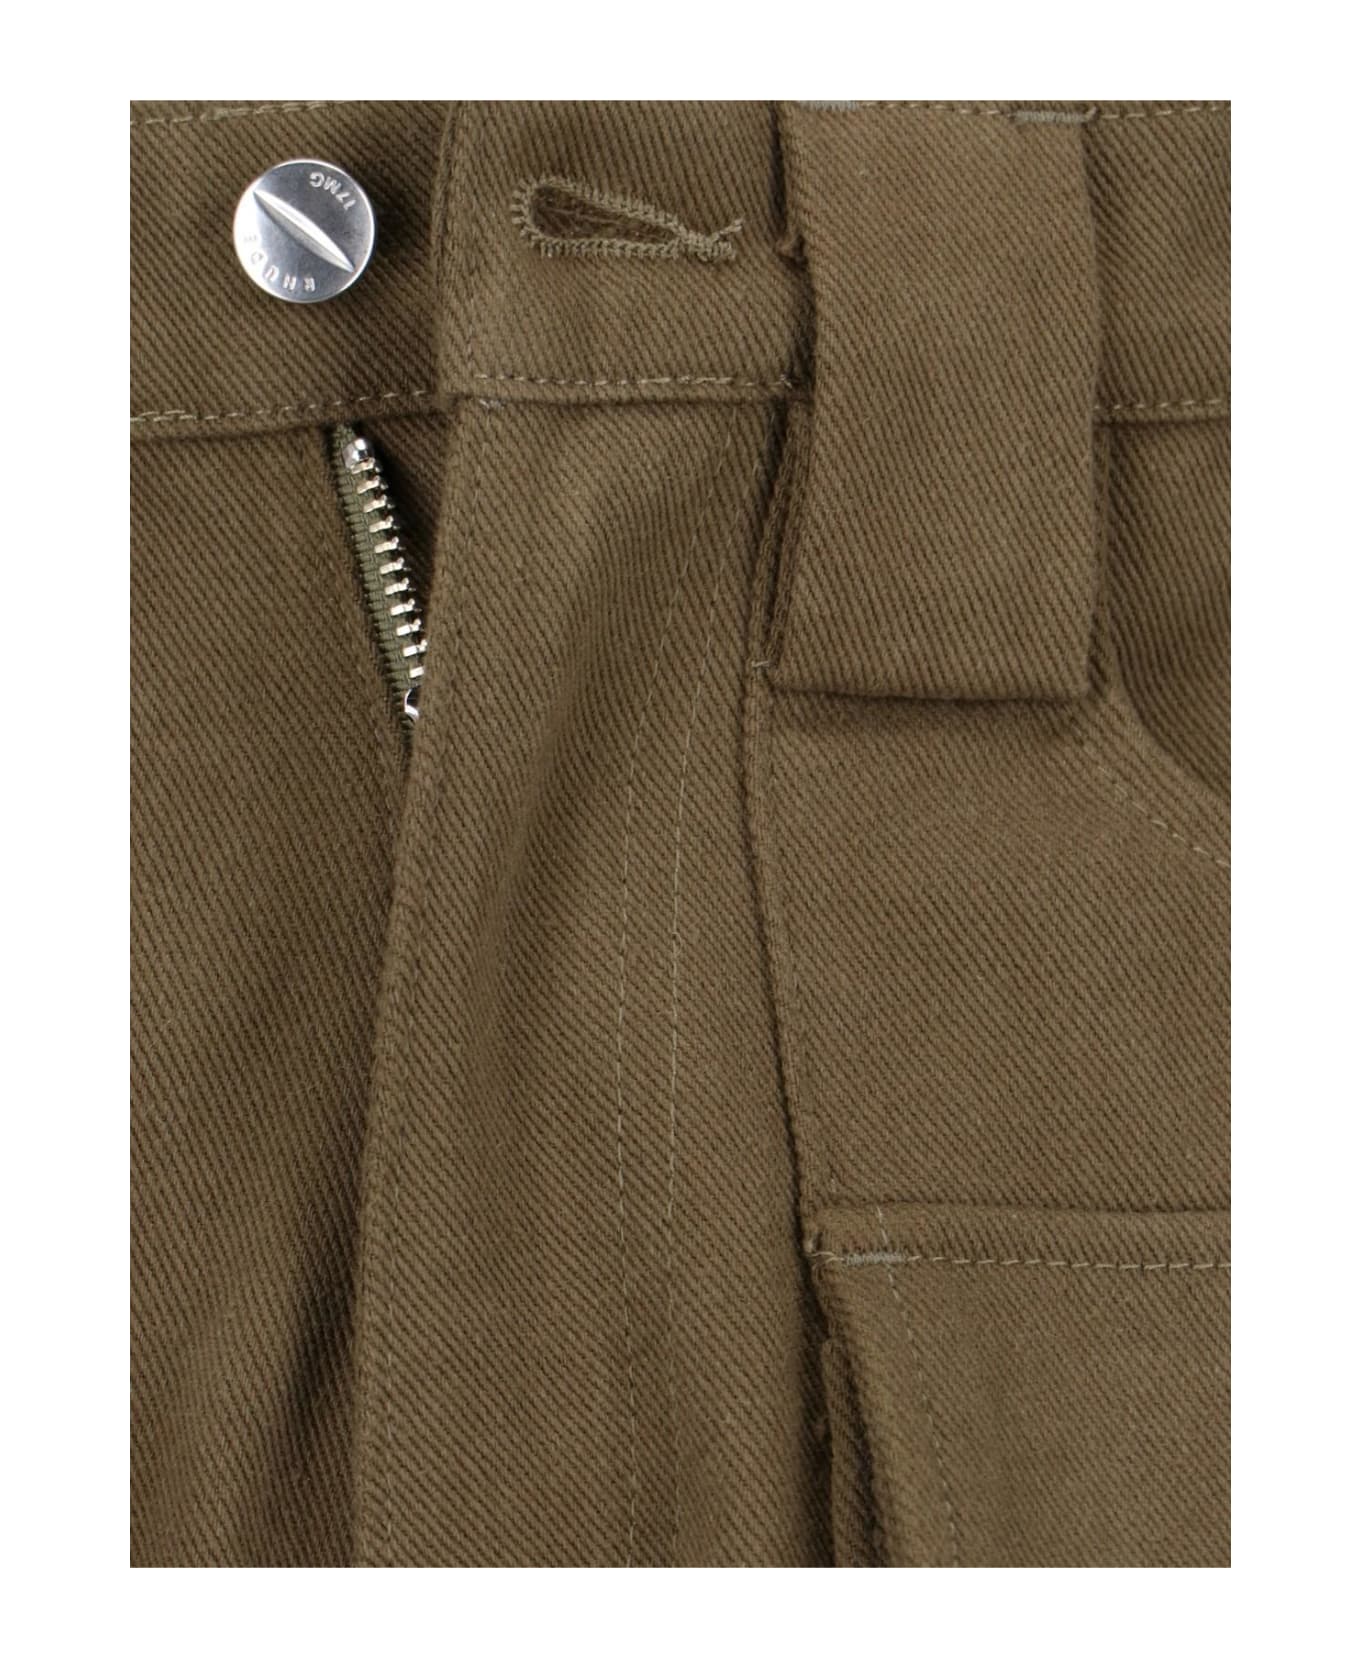 Rhude Cargo Pants - Verde militare